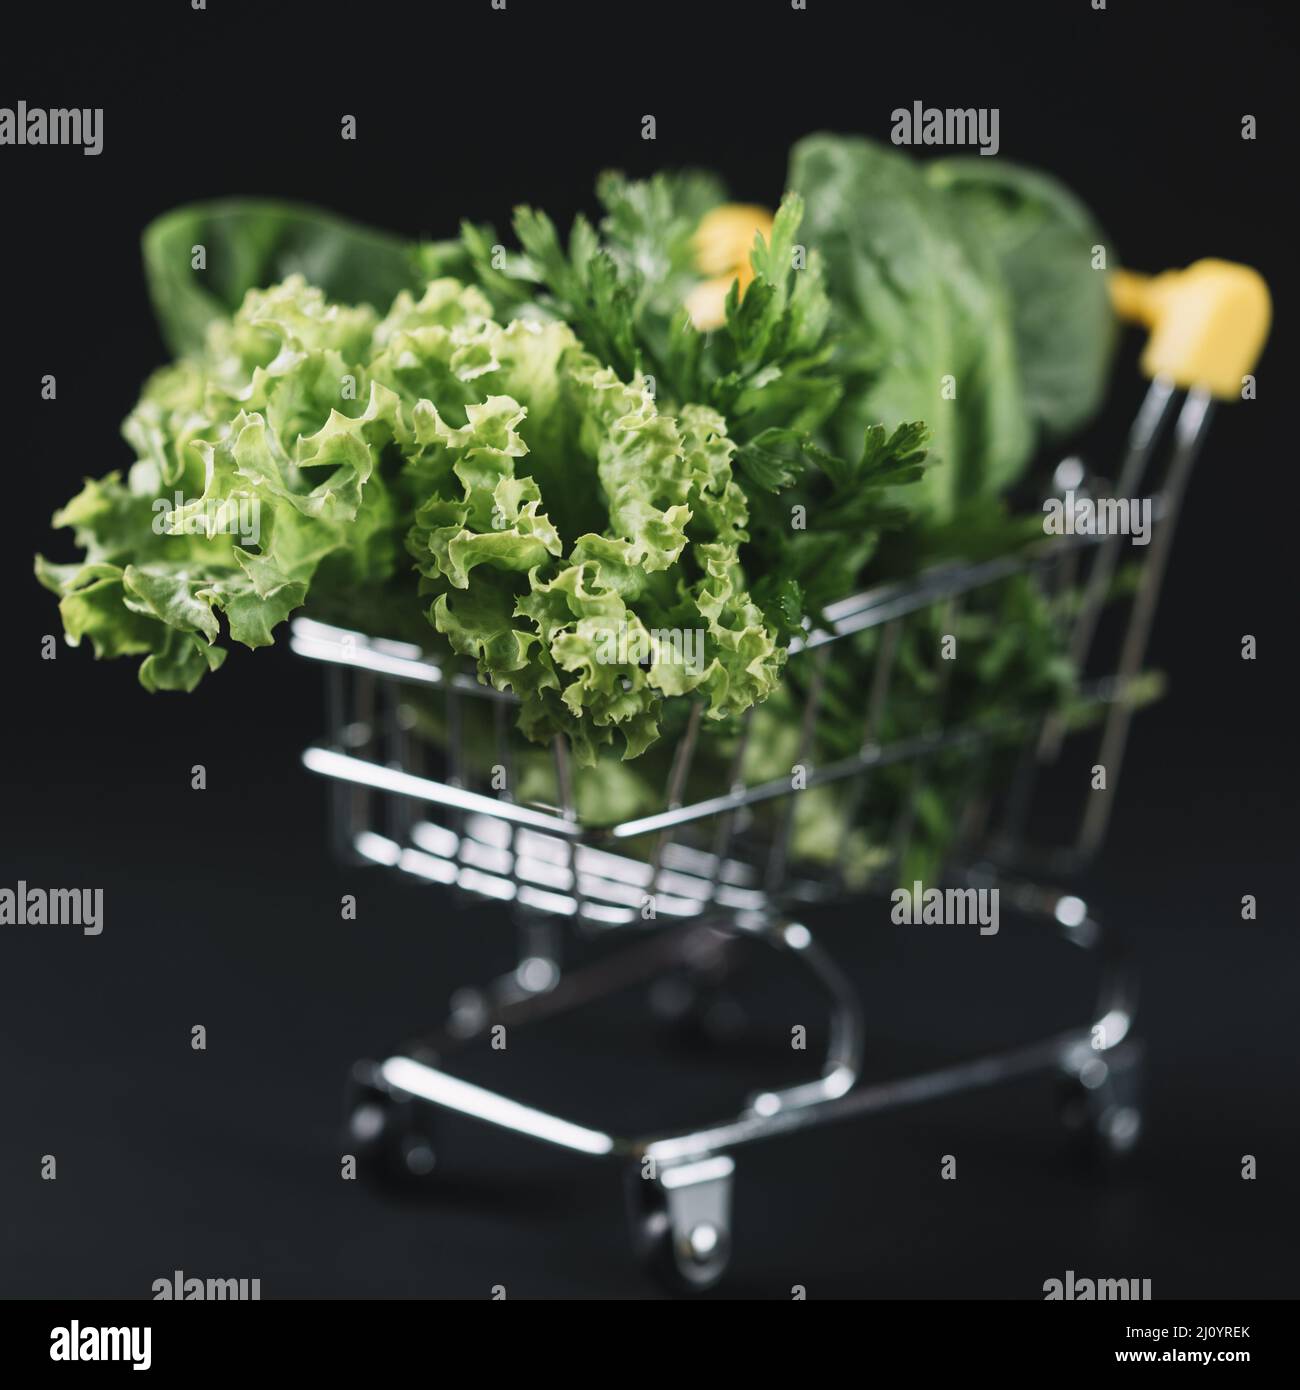 Primer plano verduras de hoja verde carrito de compras negro telón de fondo. Fotografías de alta calidad Foto de stock